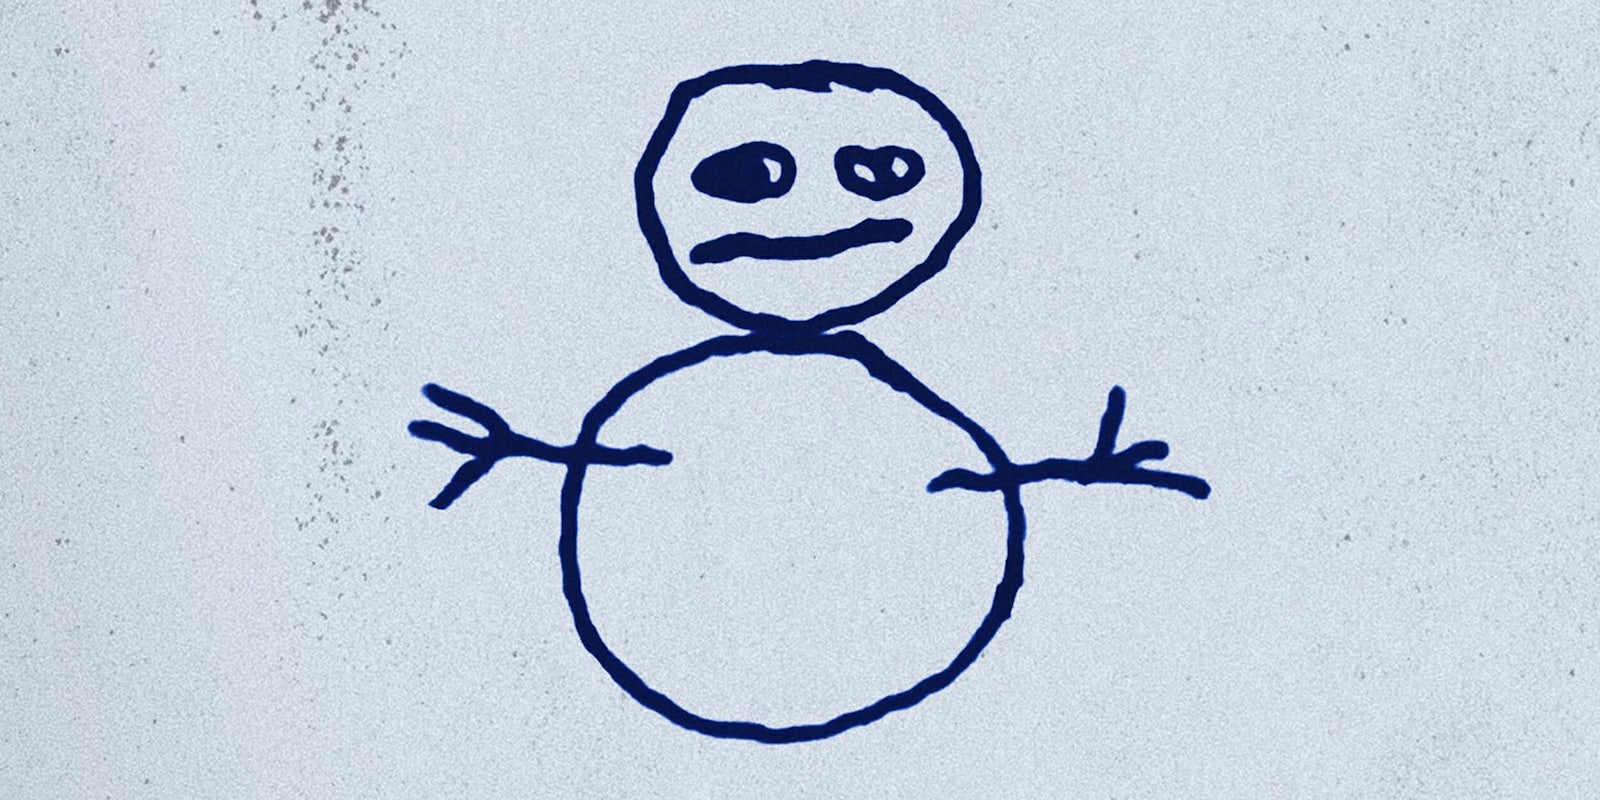 crude drawing of a snowman snowman memes